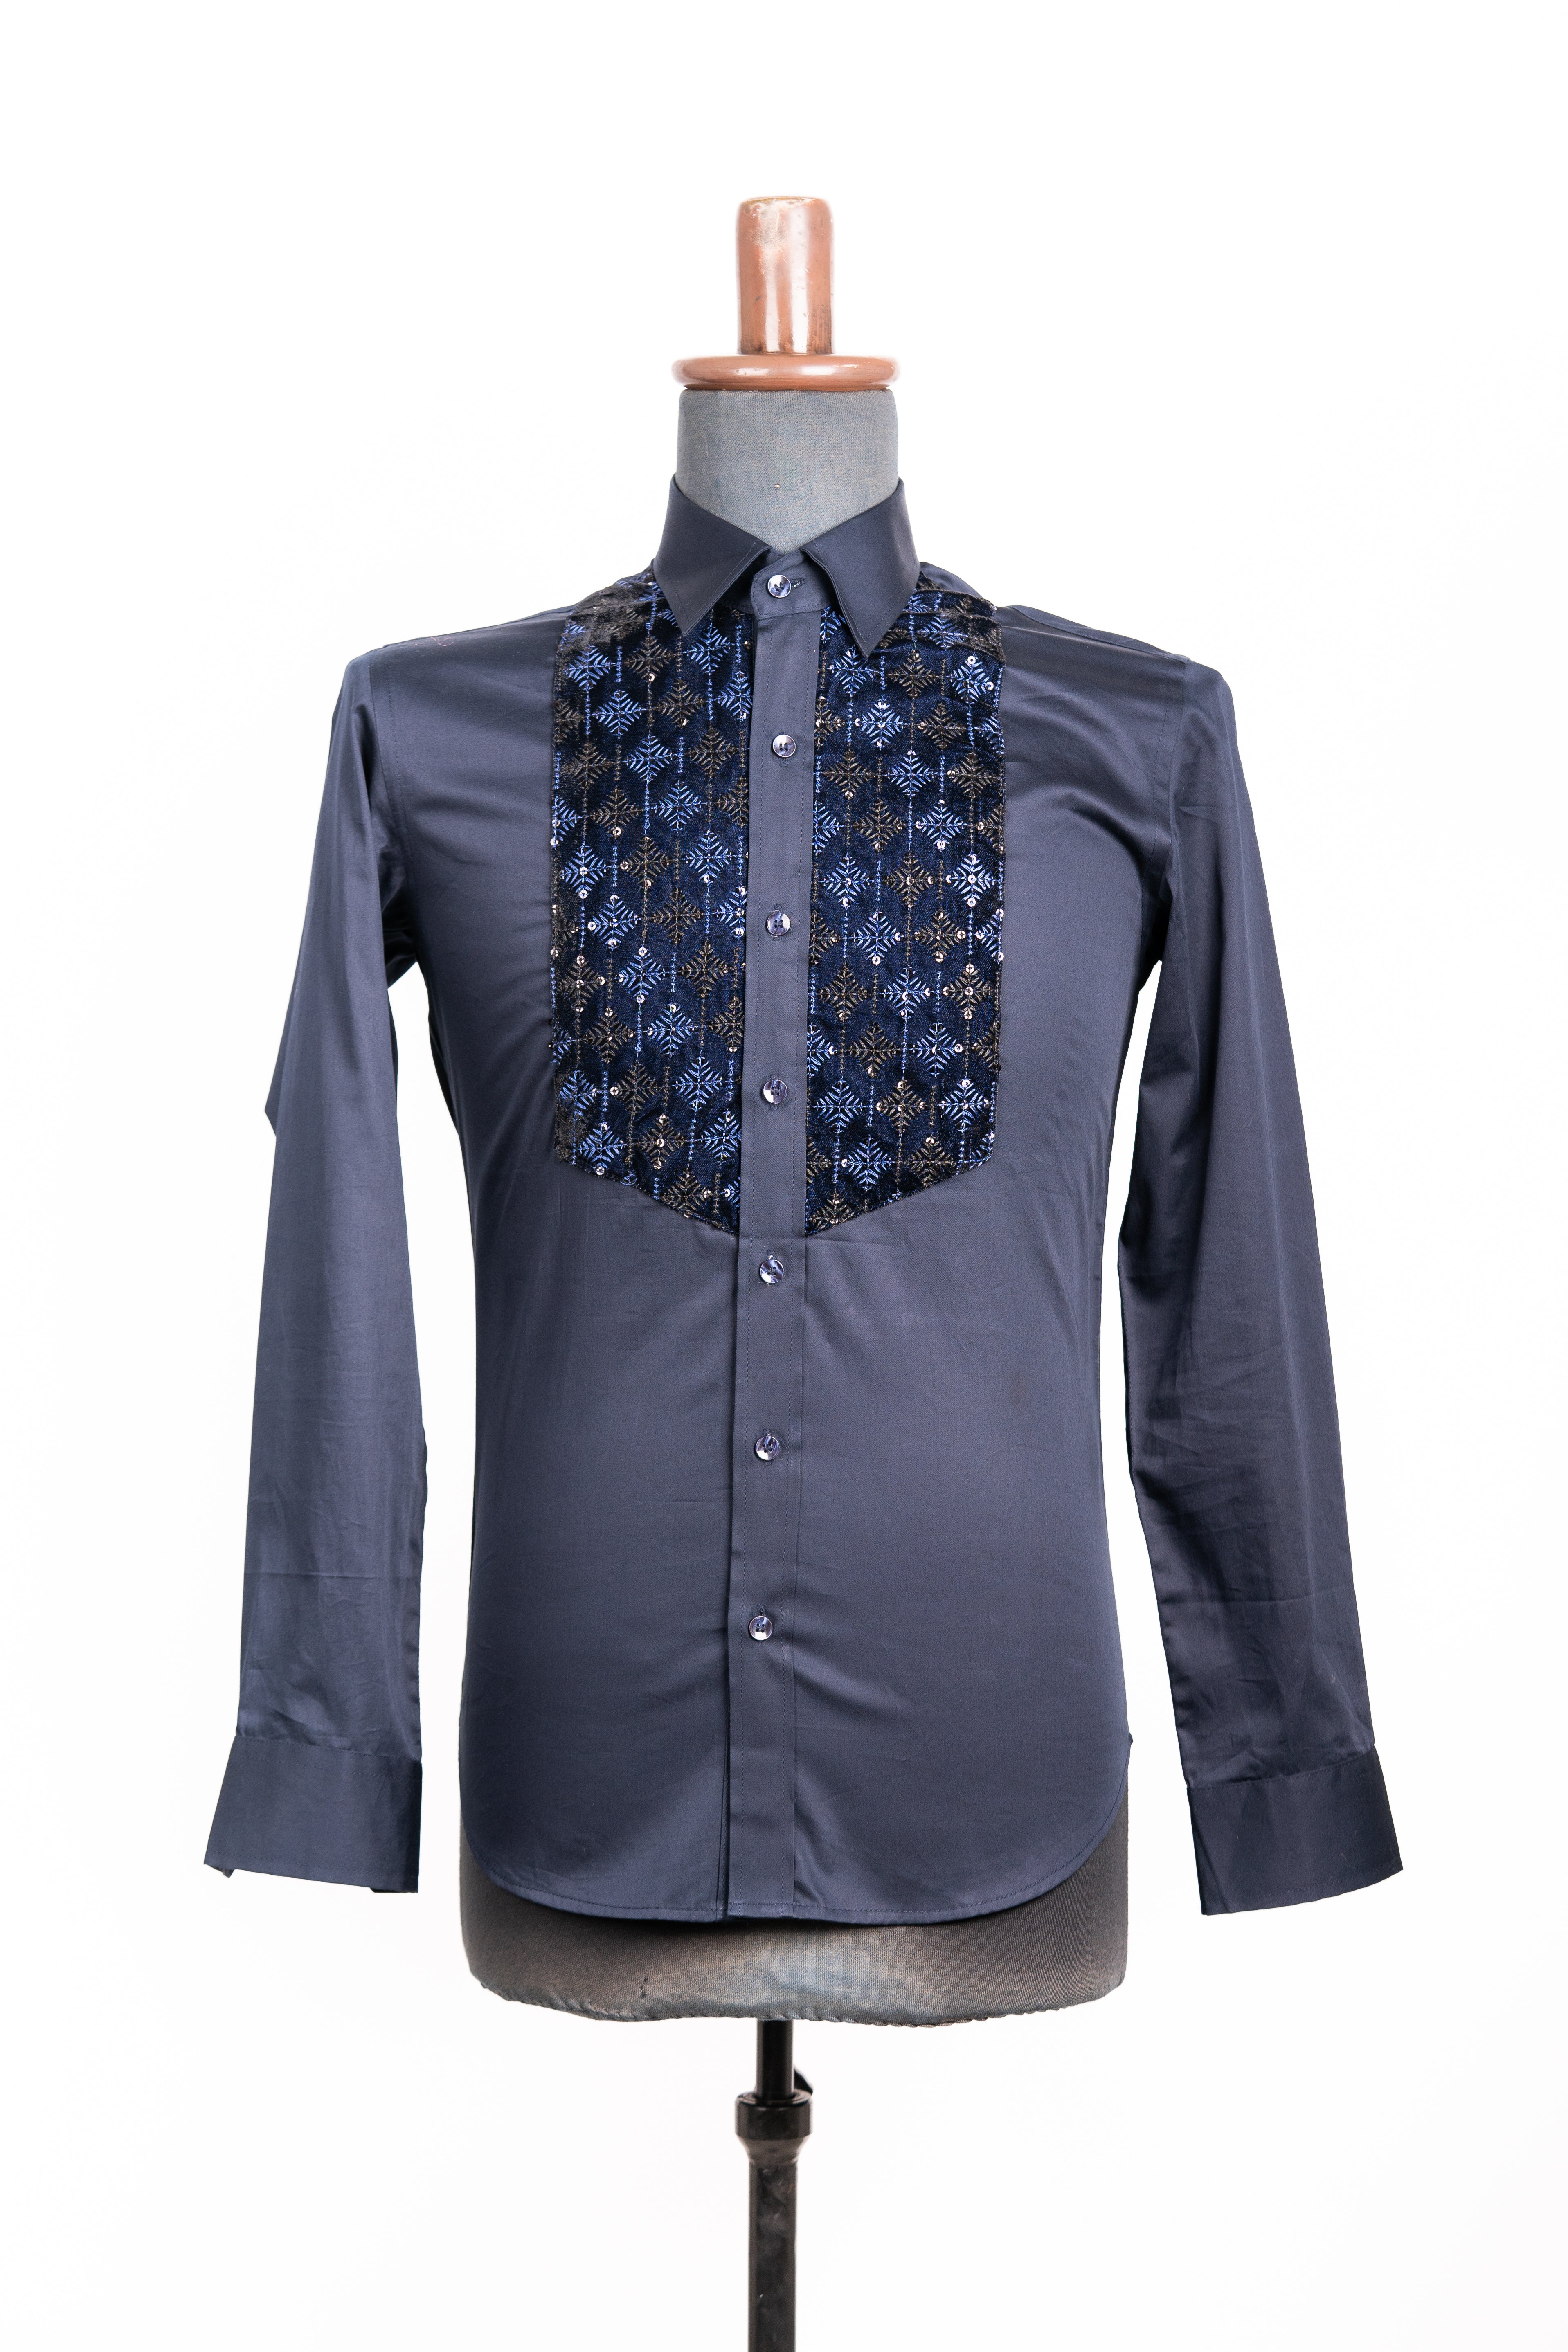 Designer navy blue shirt